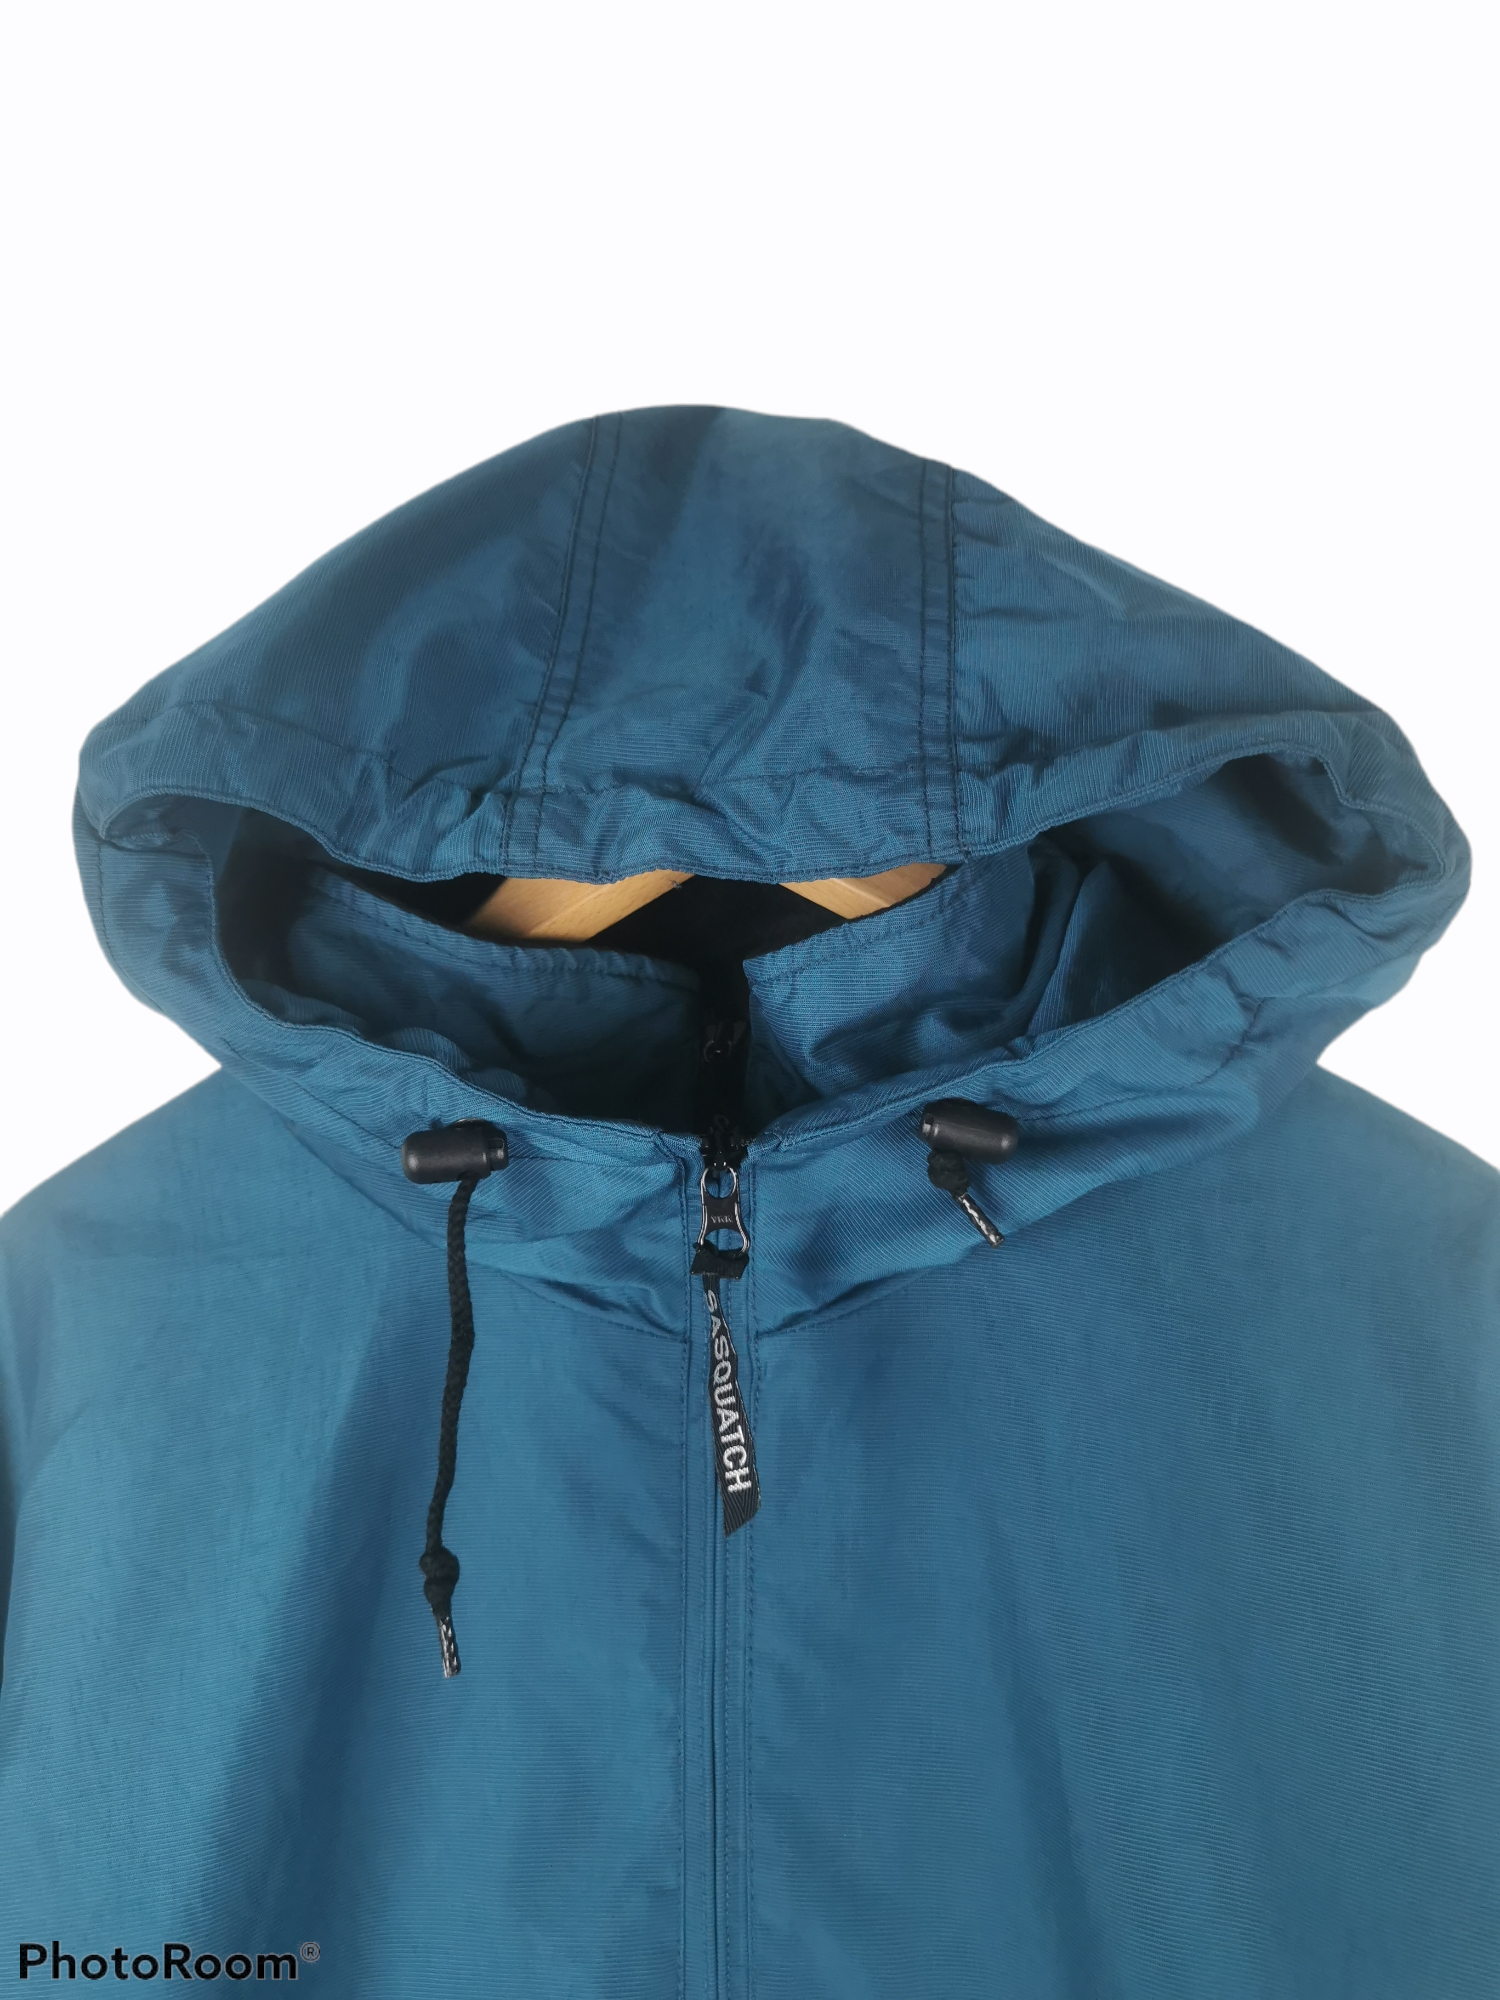 Sasquatch Hoodie Jacket Size M Oversize - 4